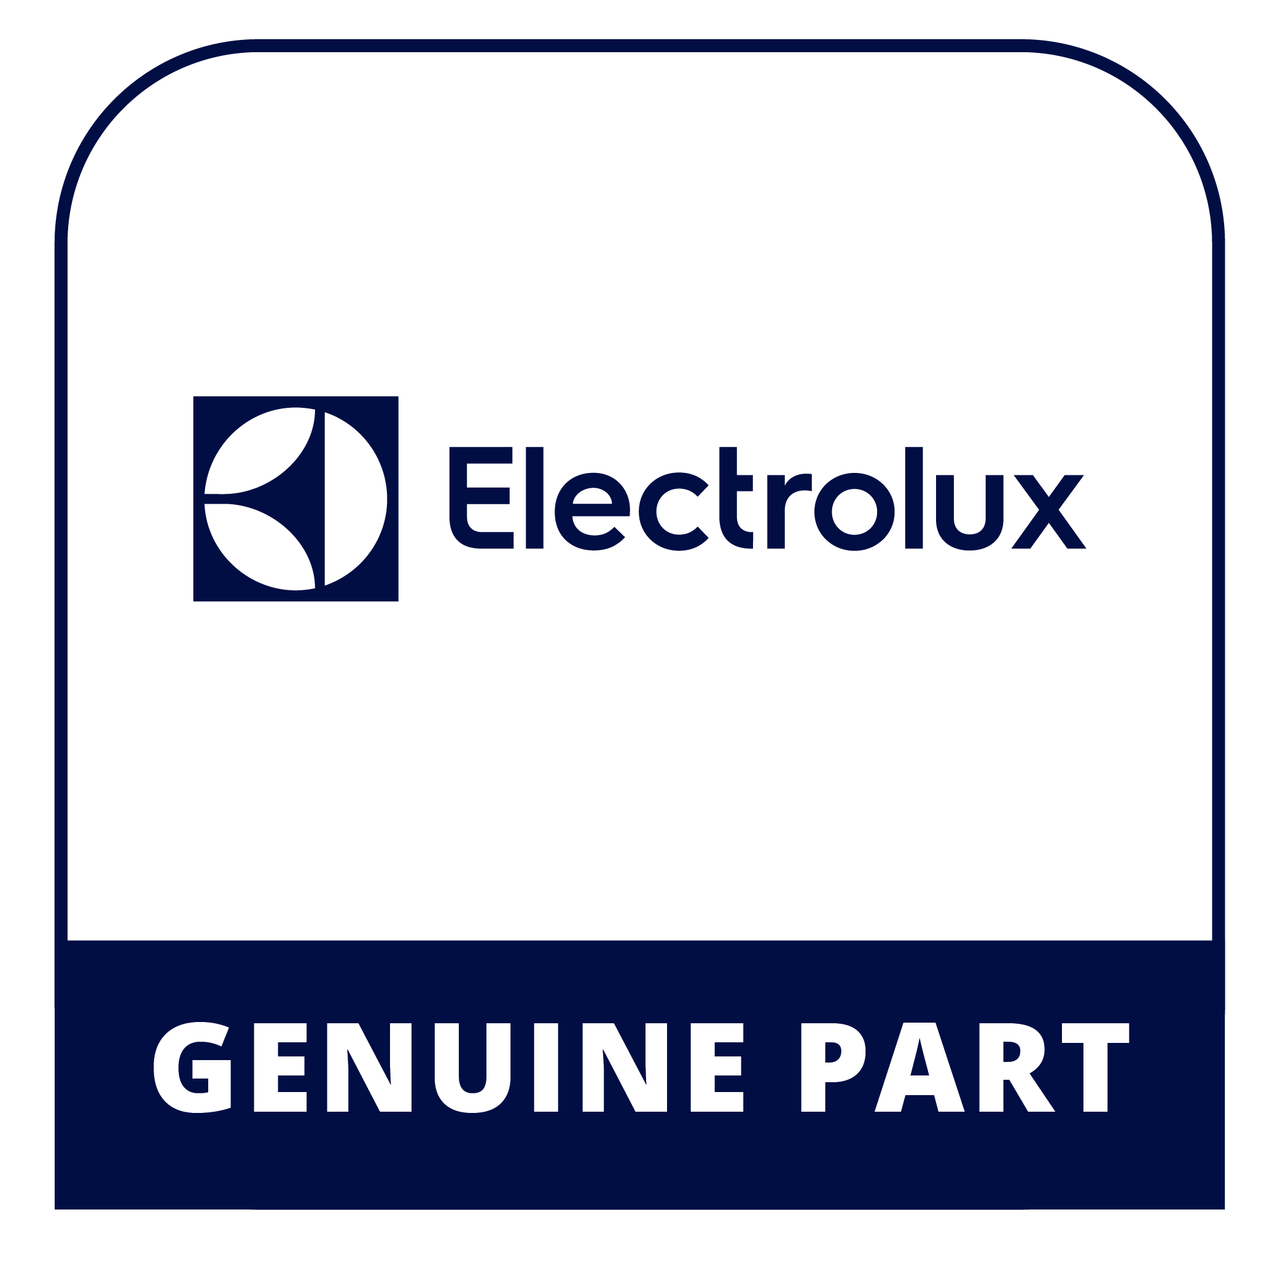 Frigidaire - Electrolux 318095959 Motor - Genuine Electrolux Part